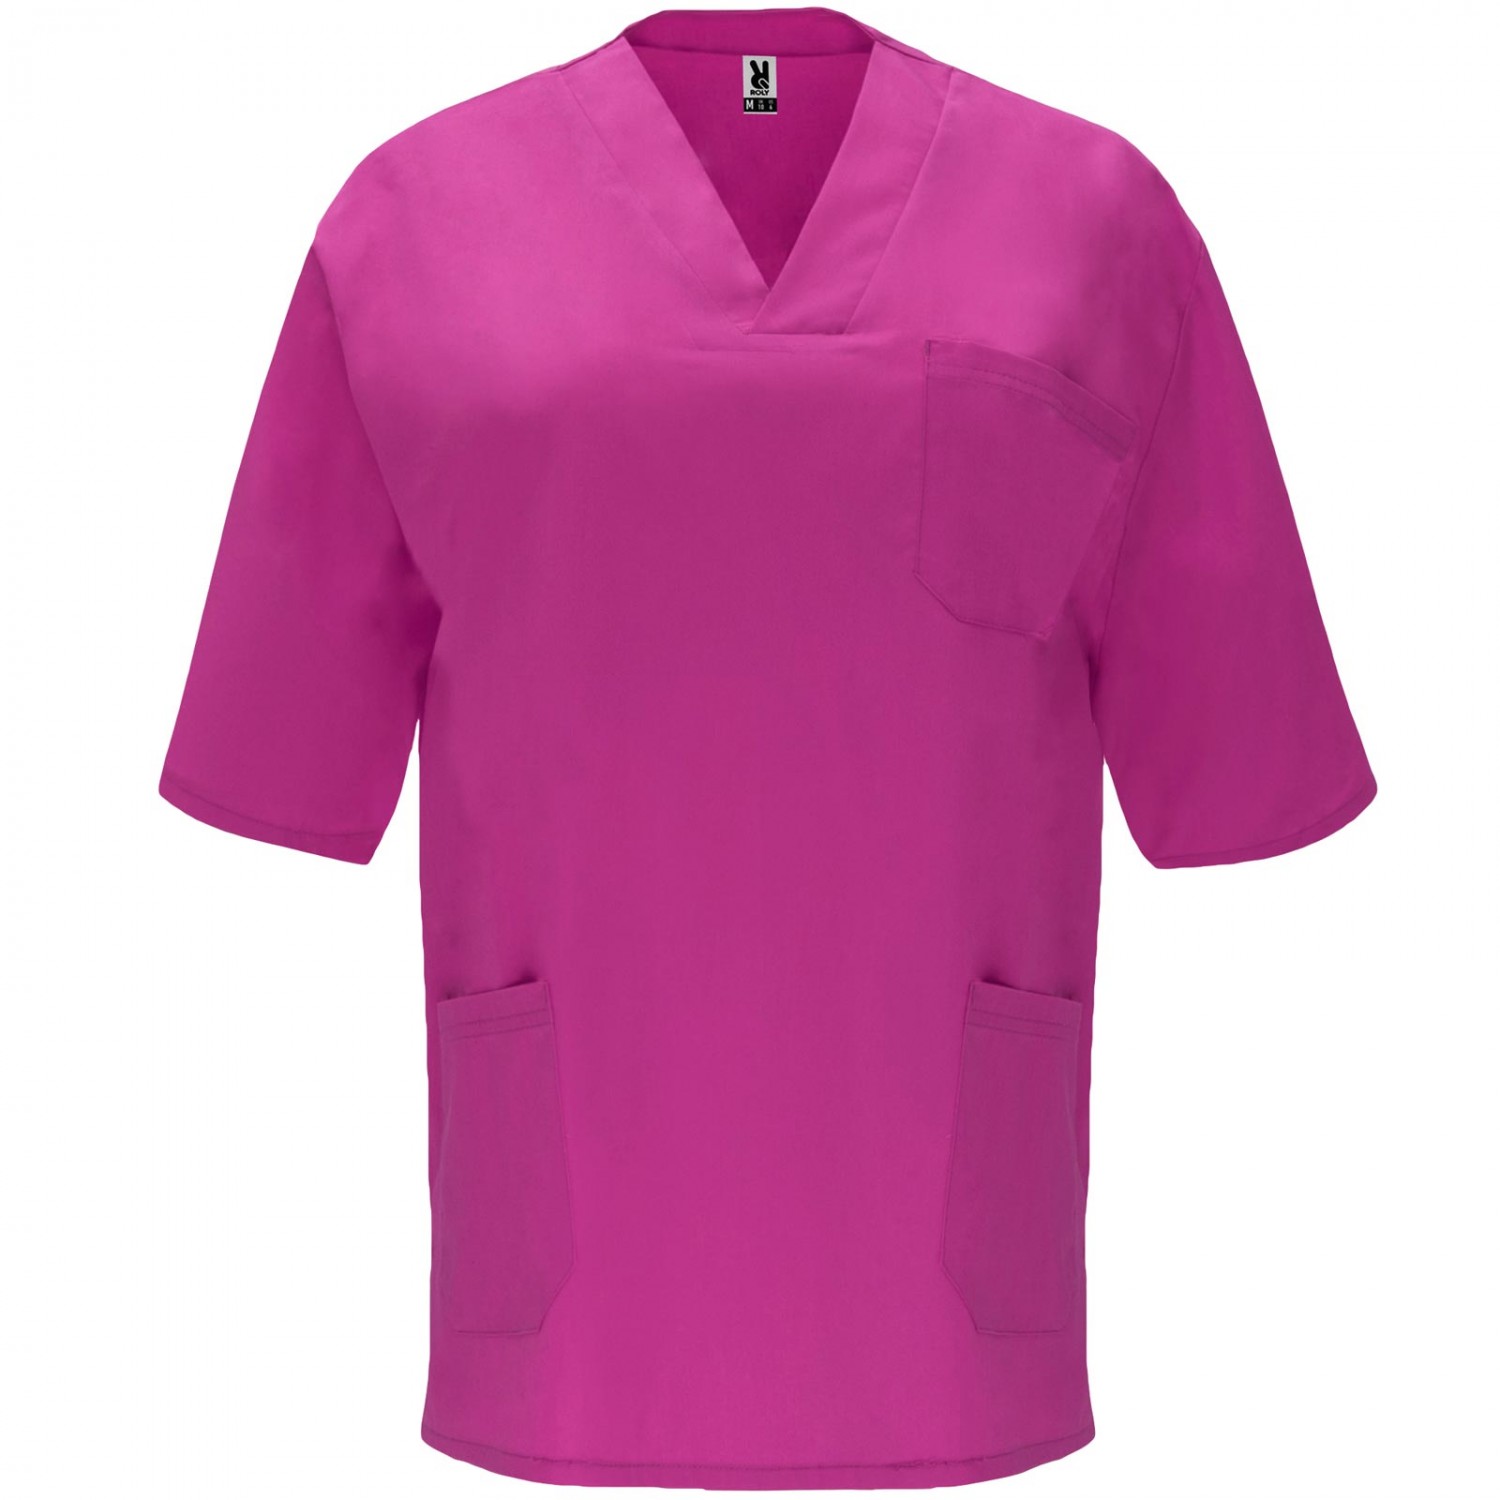 Schlupfkasack Medizin Pflege Unisex Hemd Jacke (Farbe: violett Größe: S)